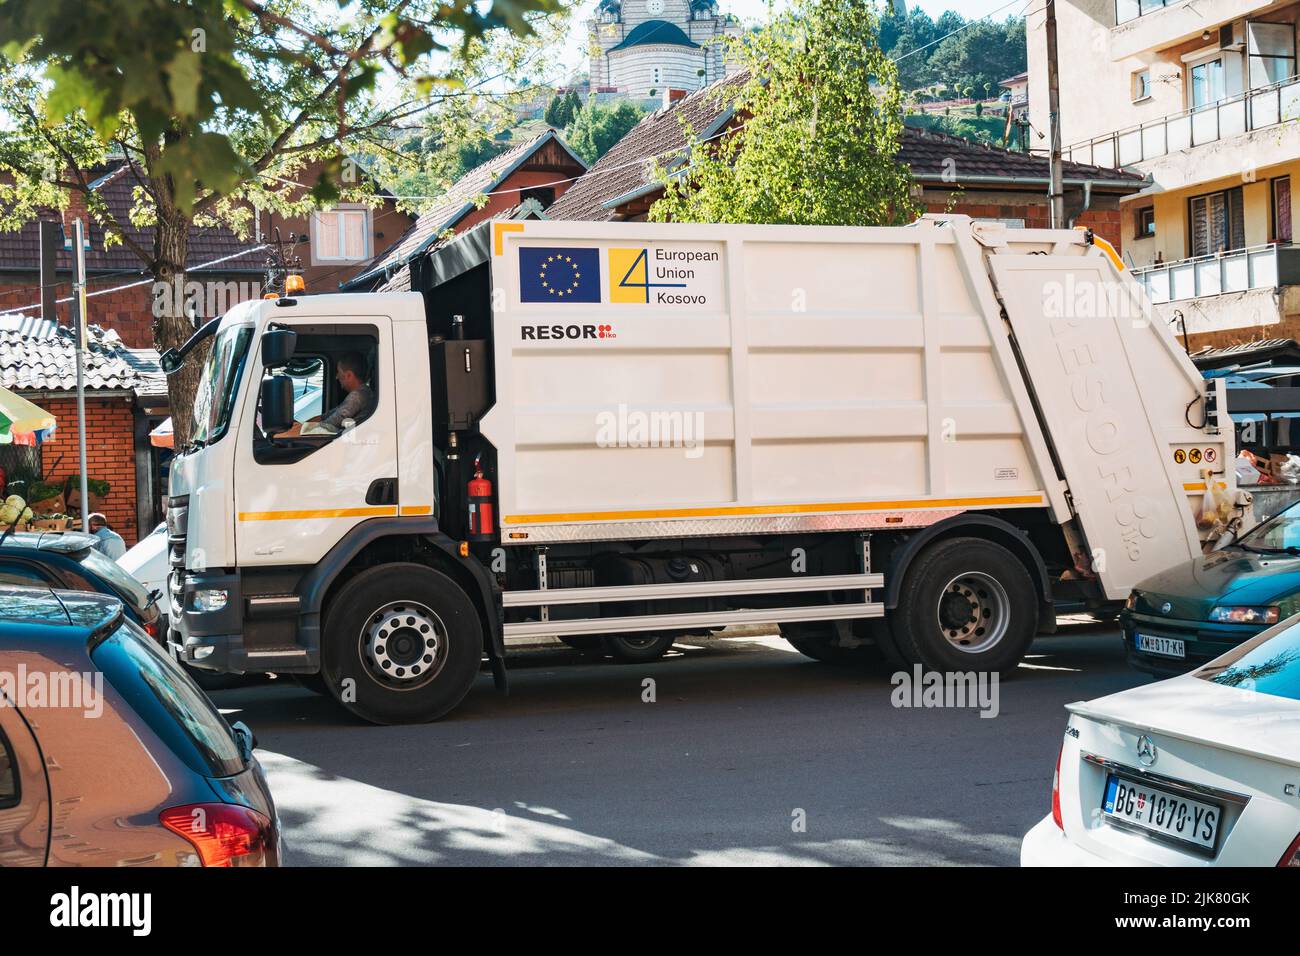 a European Union sponsored rubbish truck collects waste from the streets of North Kosovska Mitrovica, Kosovo Stock Photo